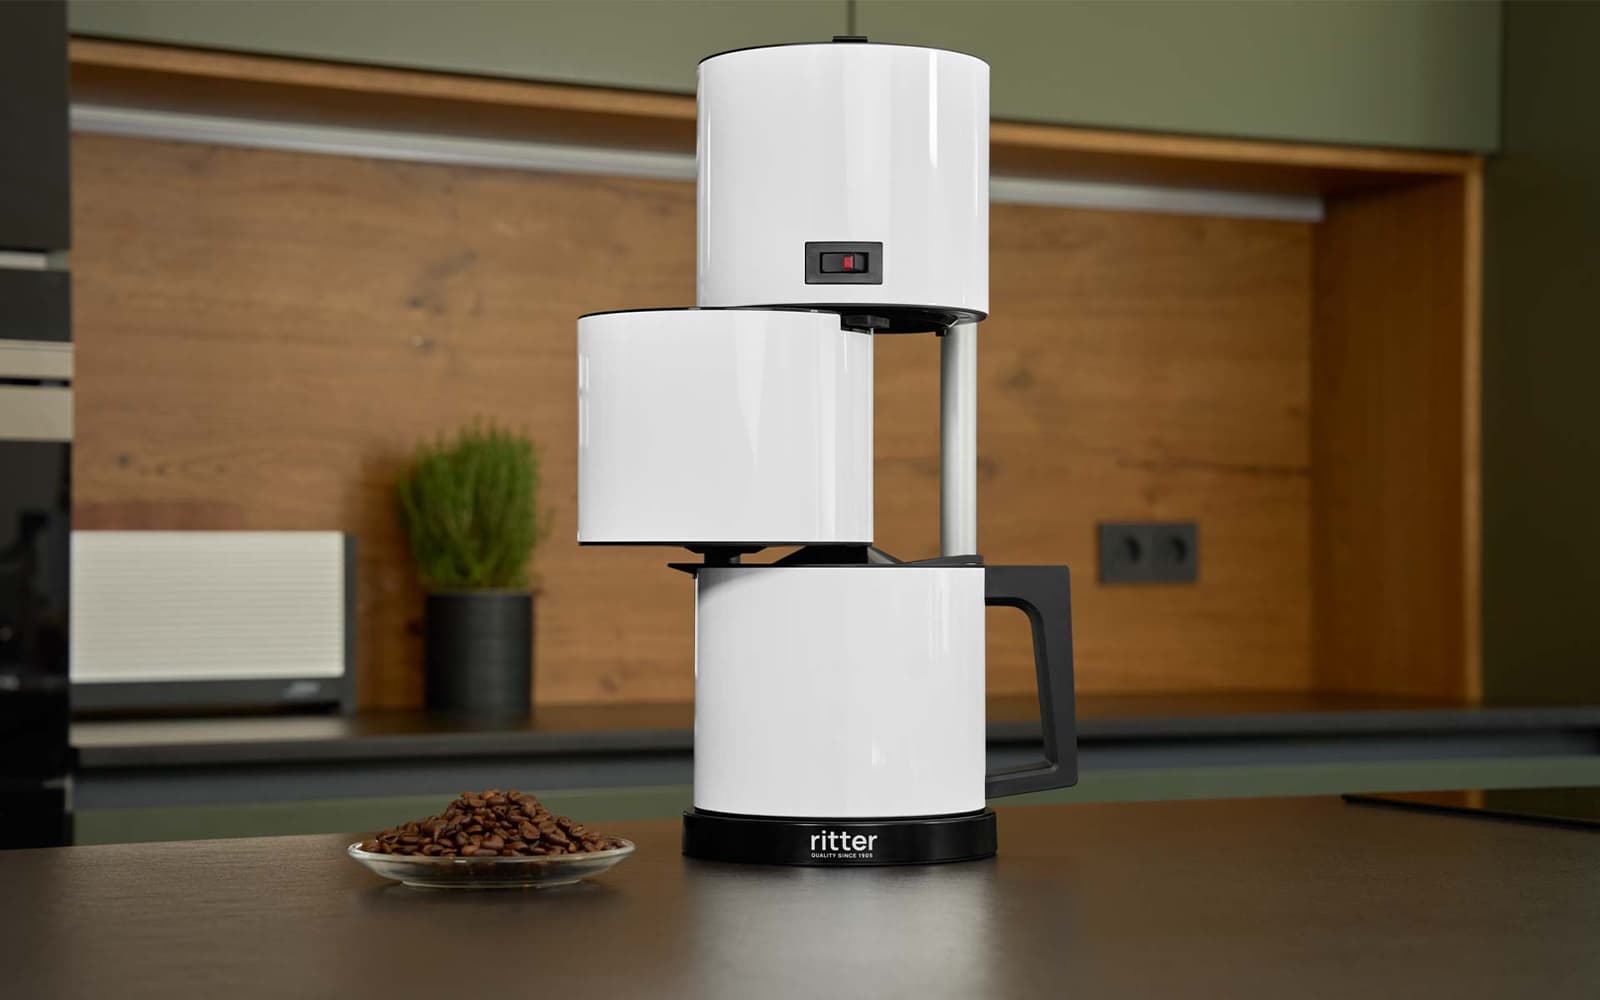 Kaffeemaschine - hochwertige Filer-Kaffeemaschine im Bauhaus-Design